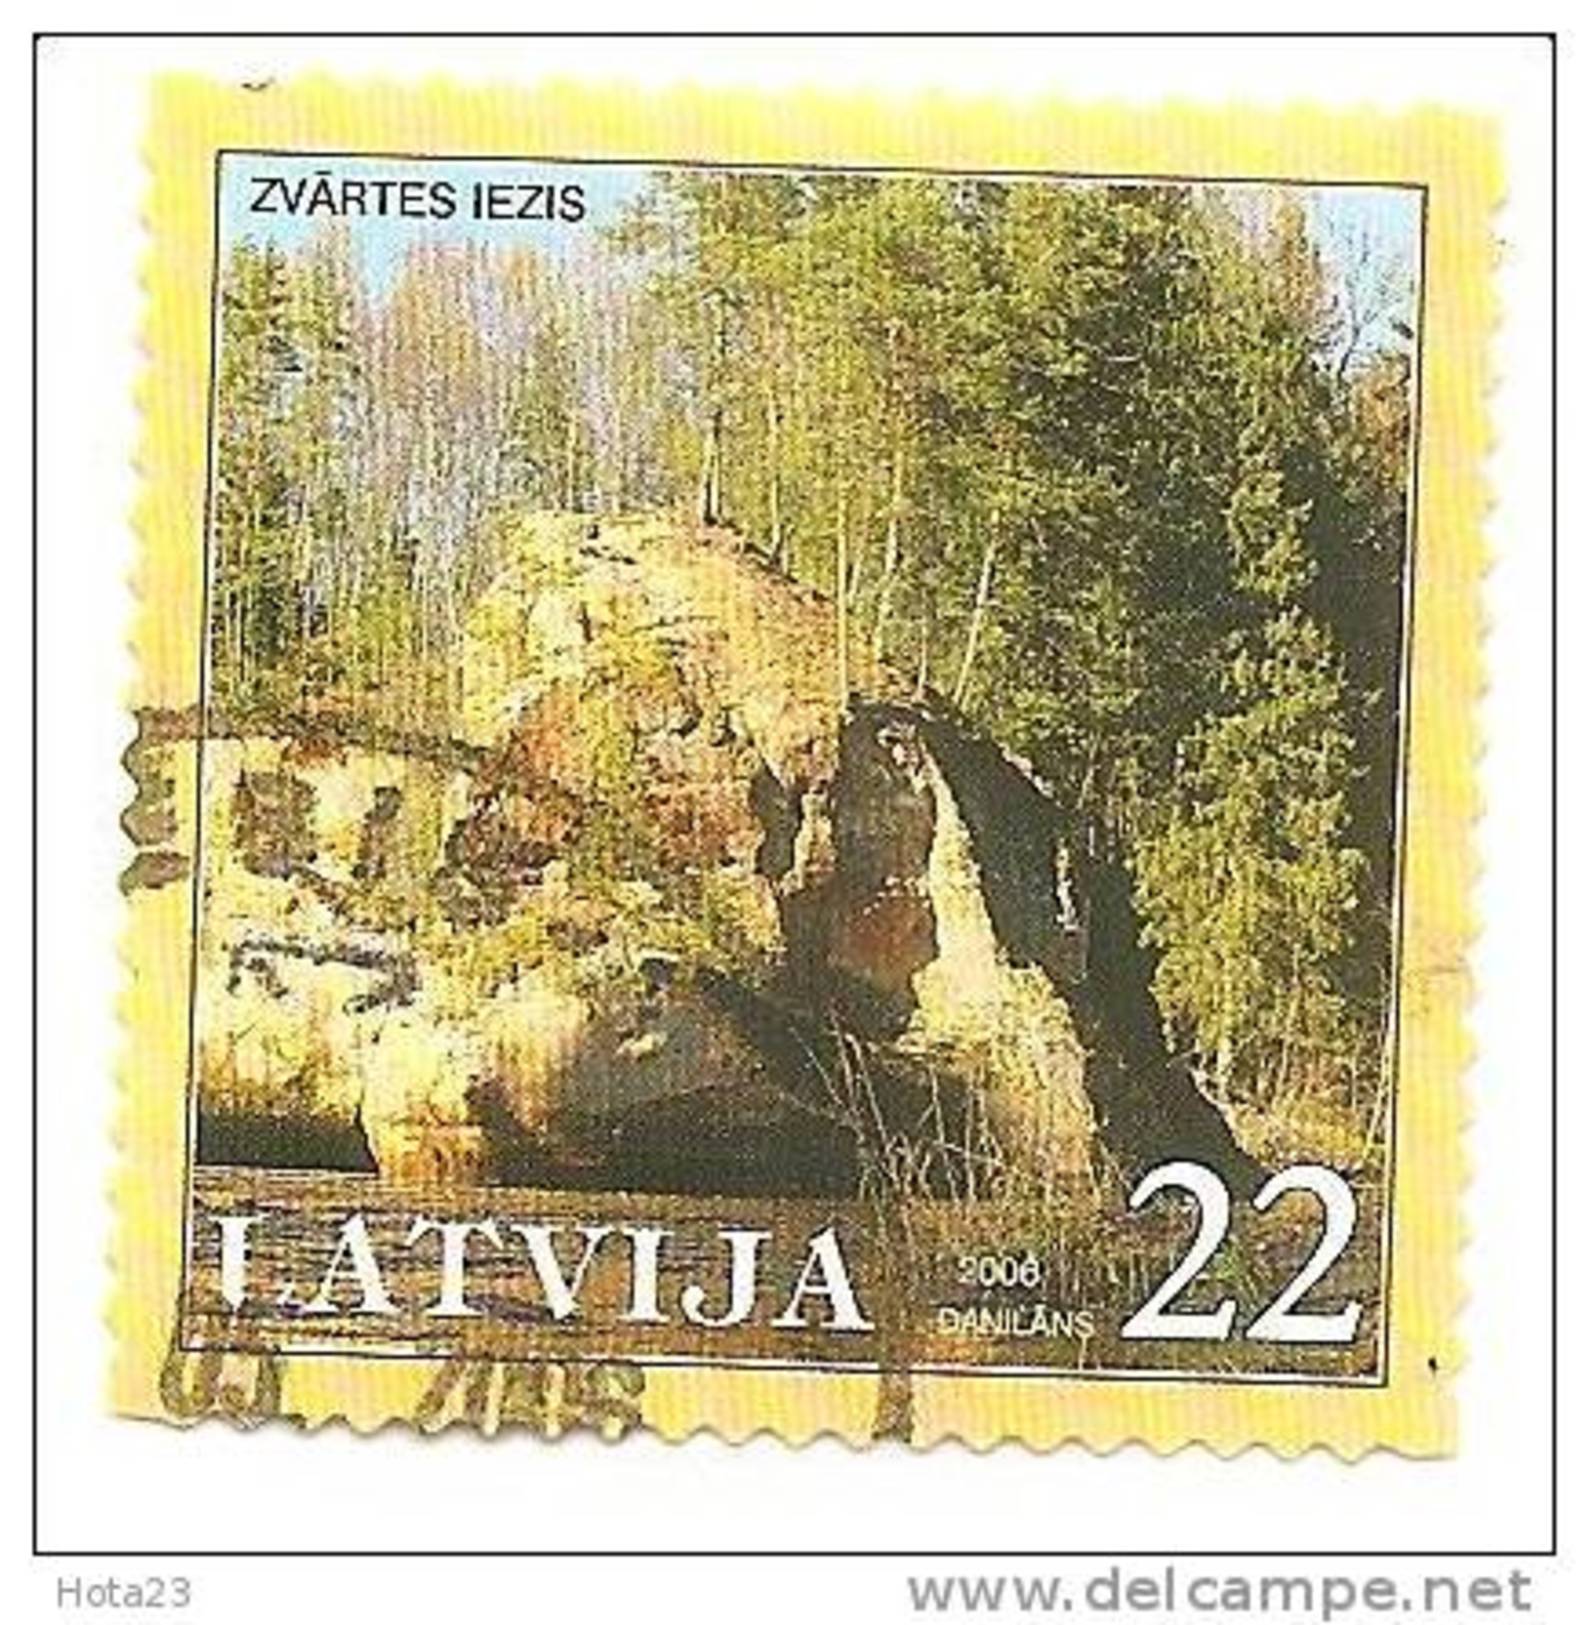 Latvia -2006 ROCK - "ZVARTA" -- Used (0) - Lettonia